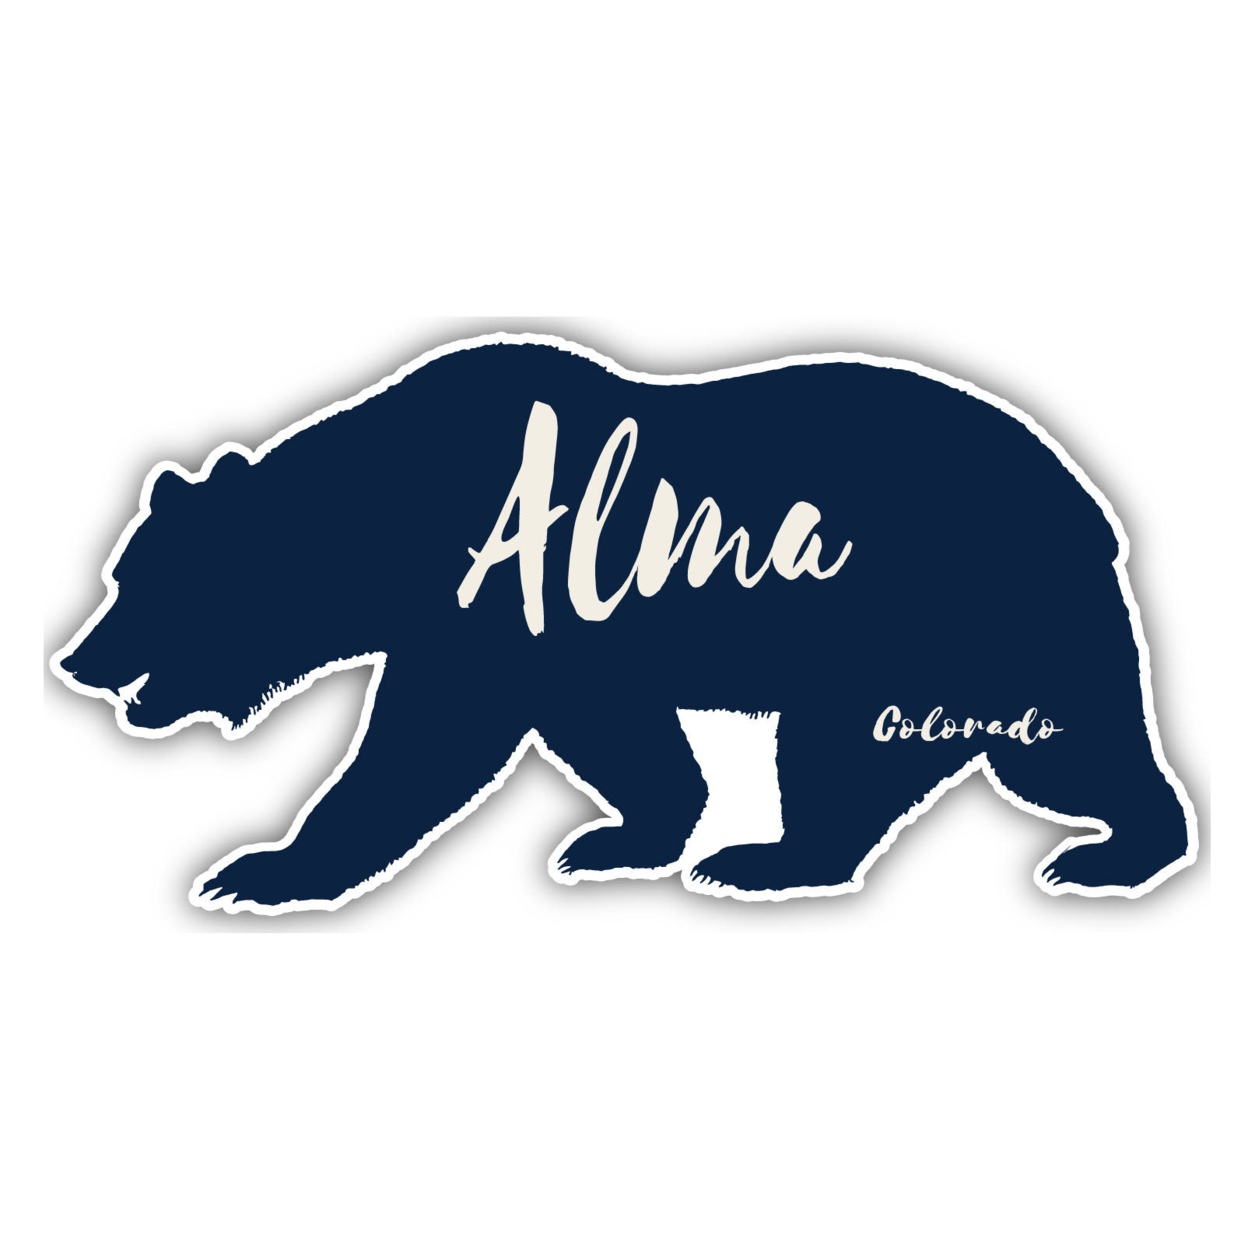 Alma Colorado Souvenir Decorative Stickers (Choose Theme And Size) - 4-Pack, 10-Inch, Bear